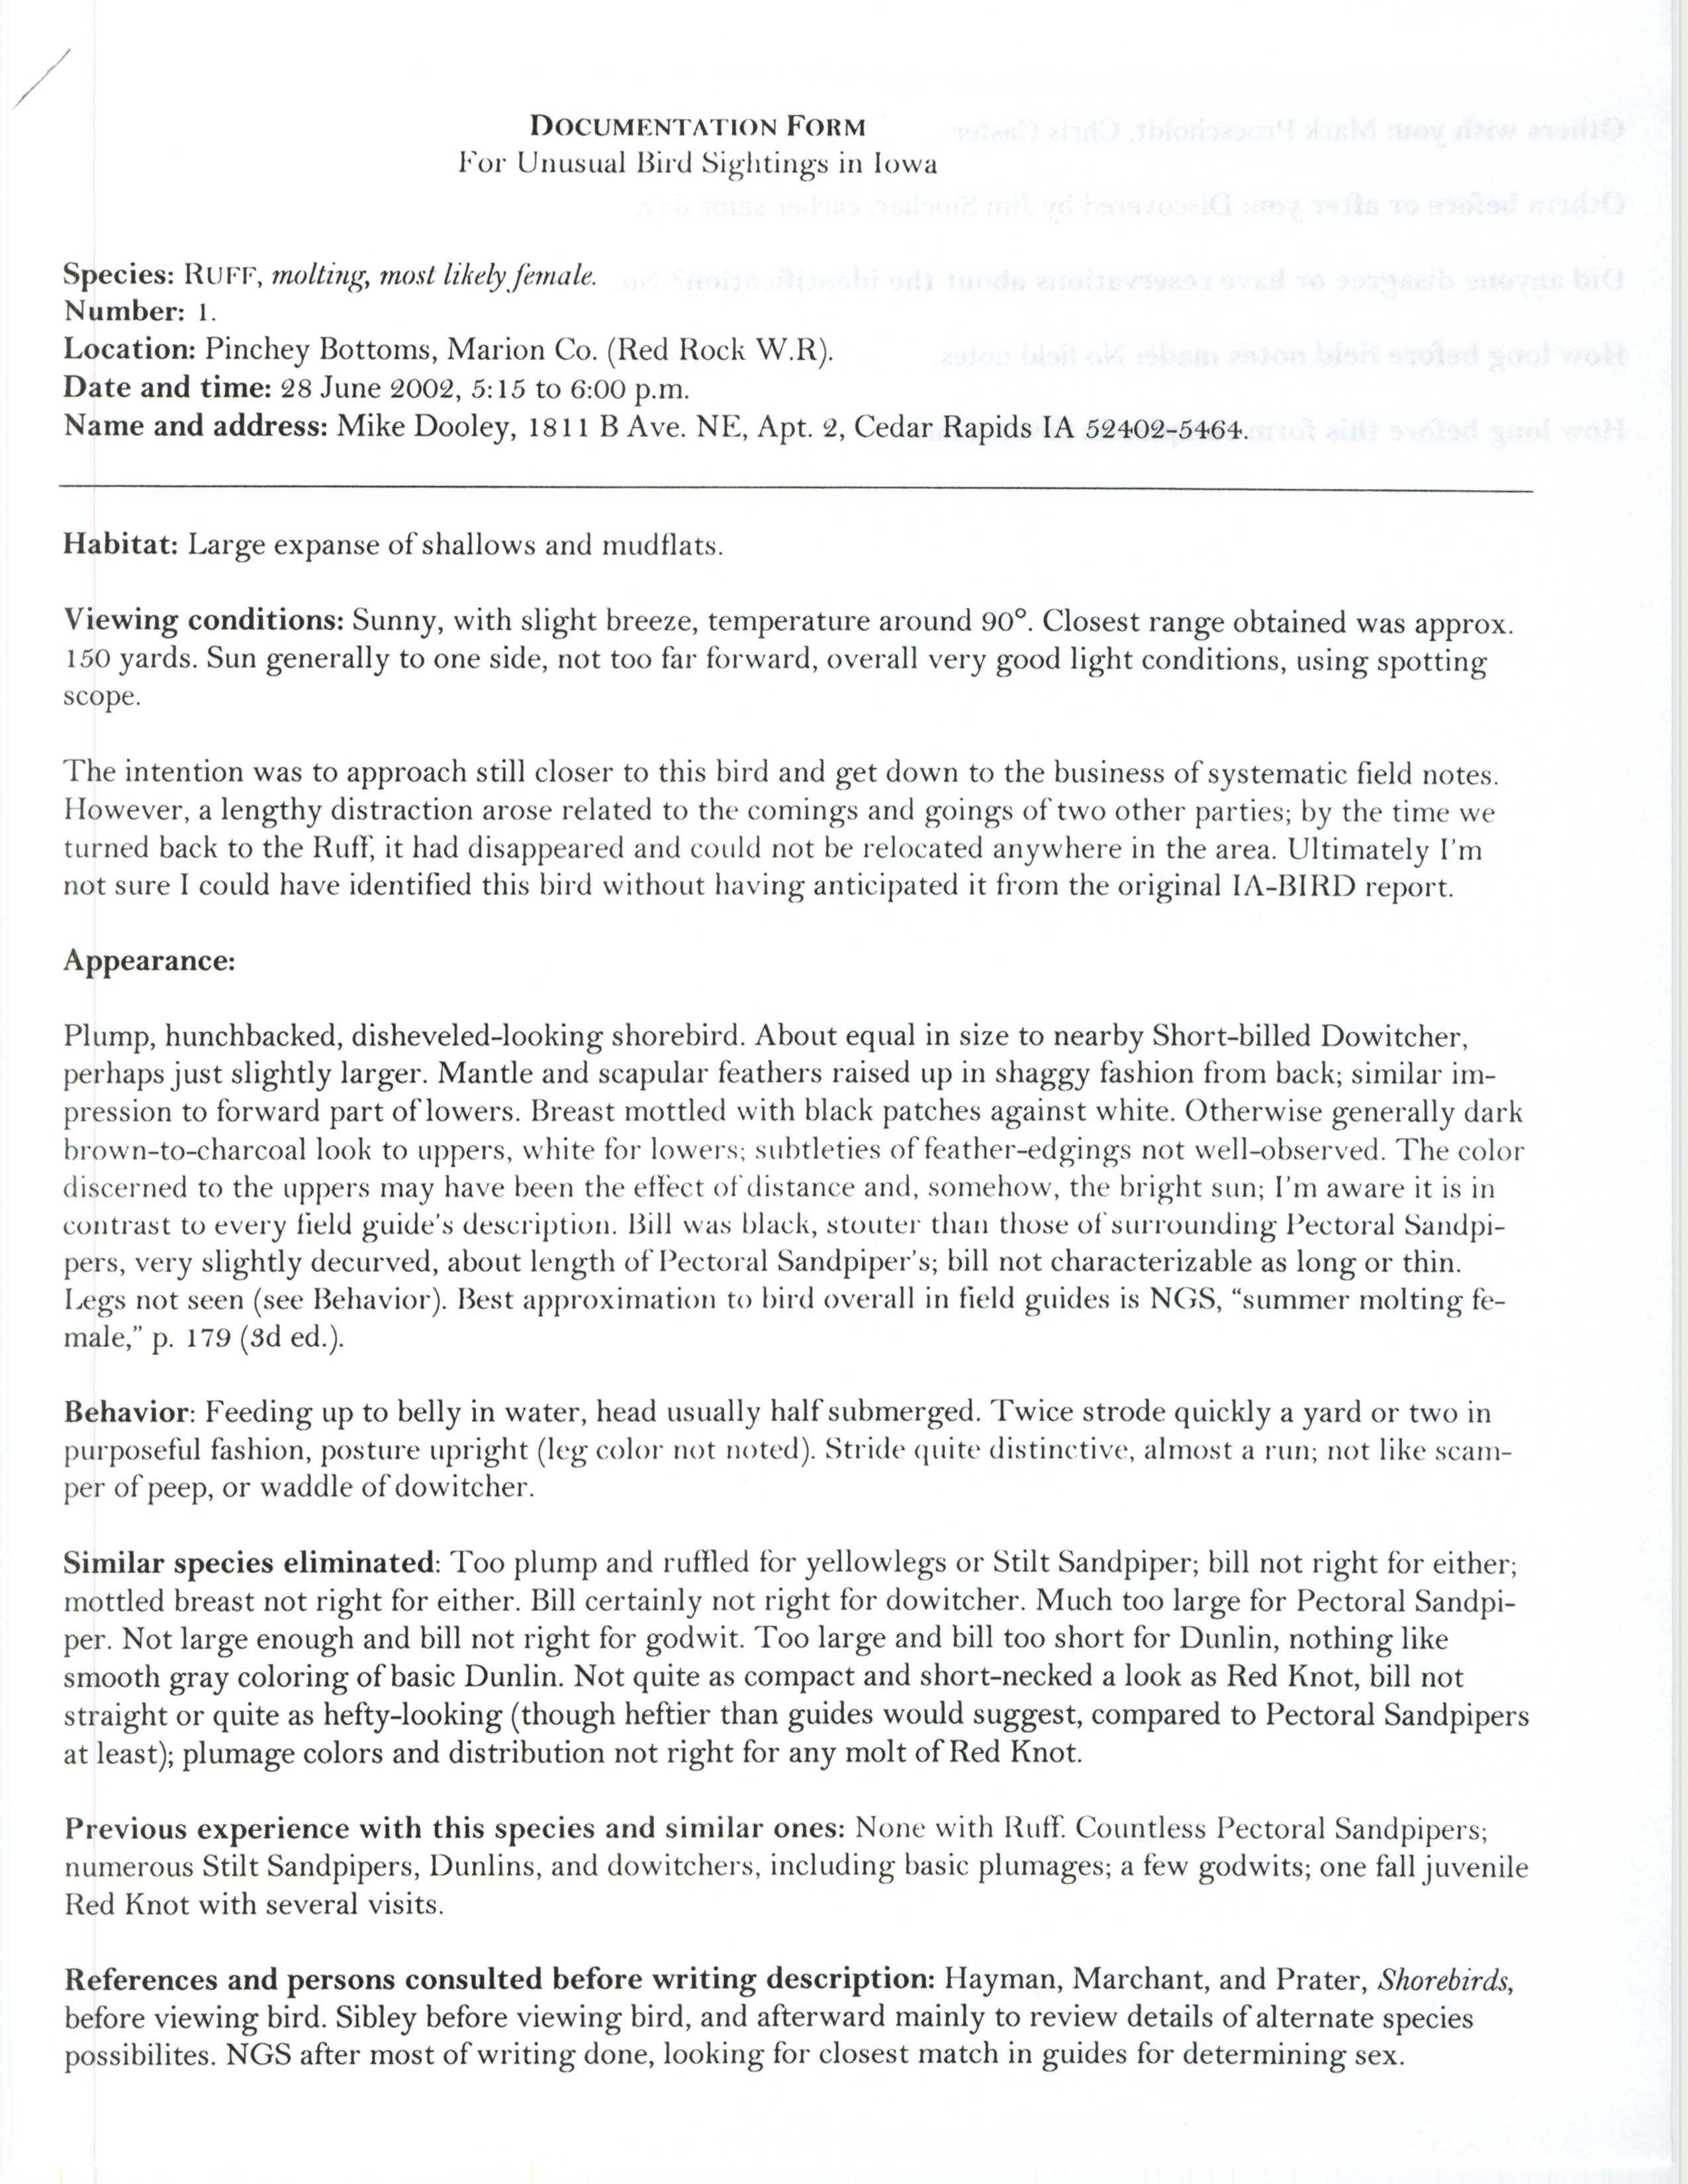 Documentation form for unusual bird sightings in Iowa, Ruff, Michael C. Dooley, June 28, 2002